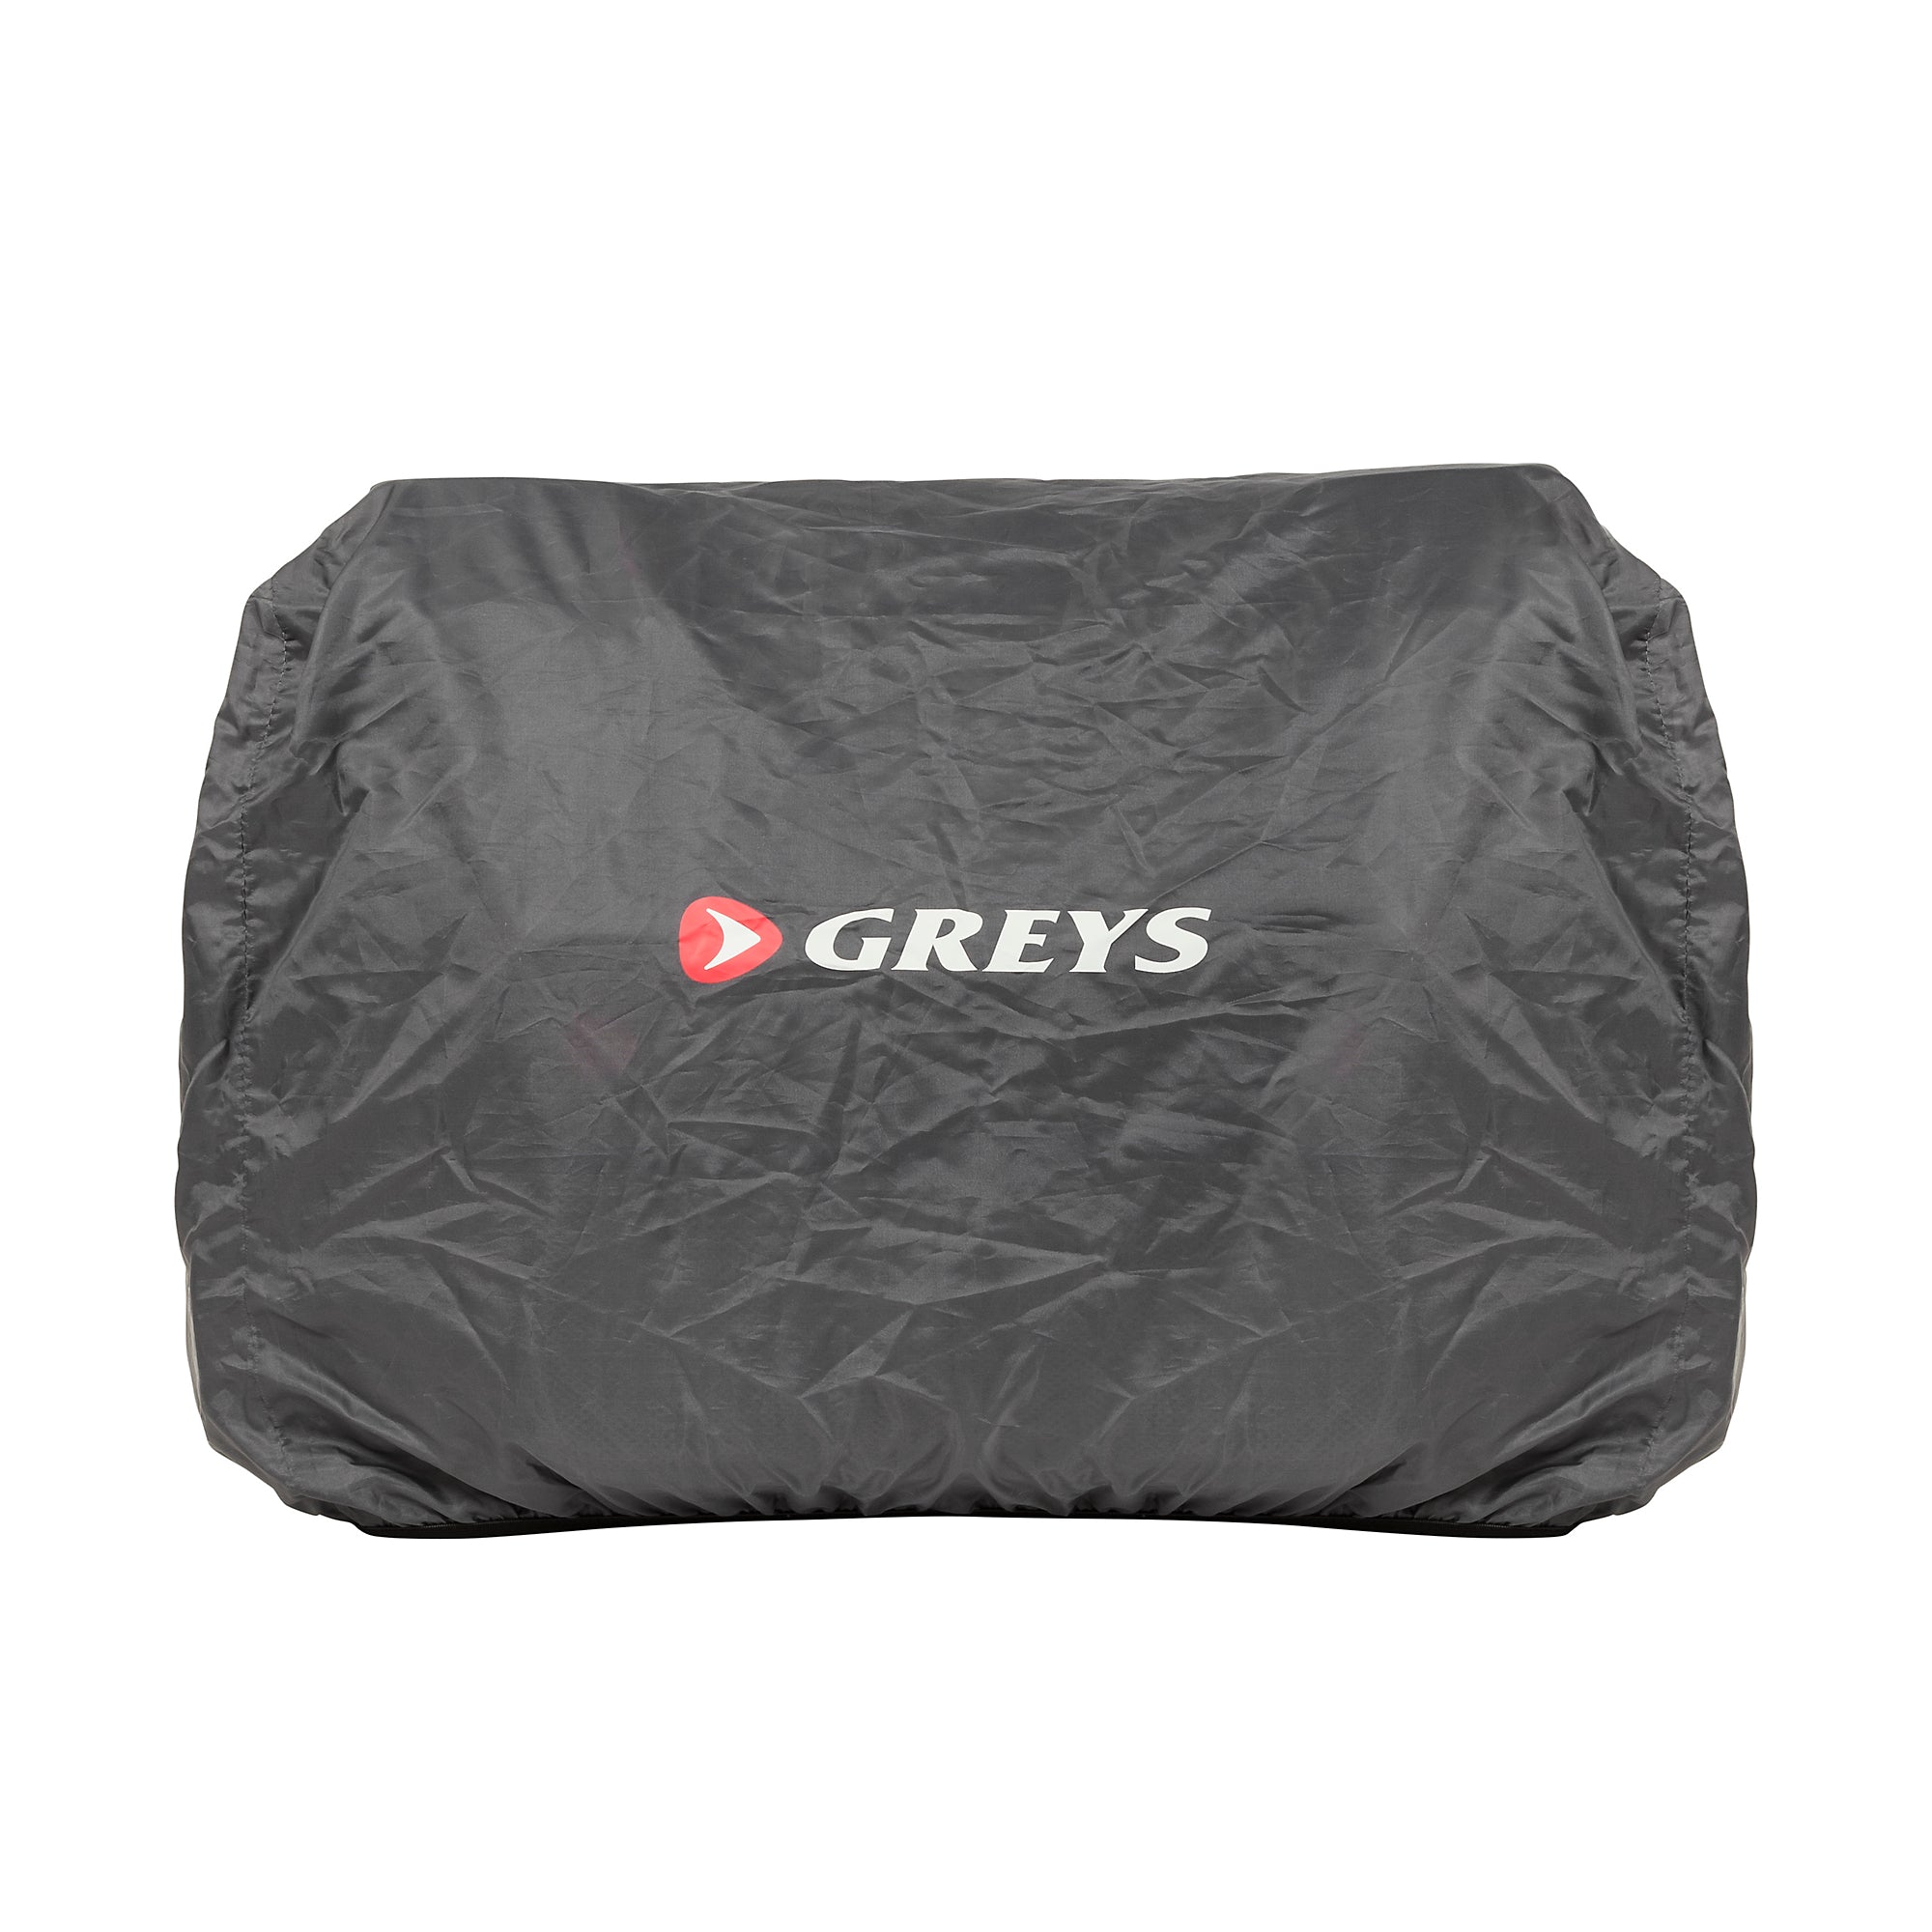 GREYS BOAT BAG